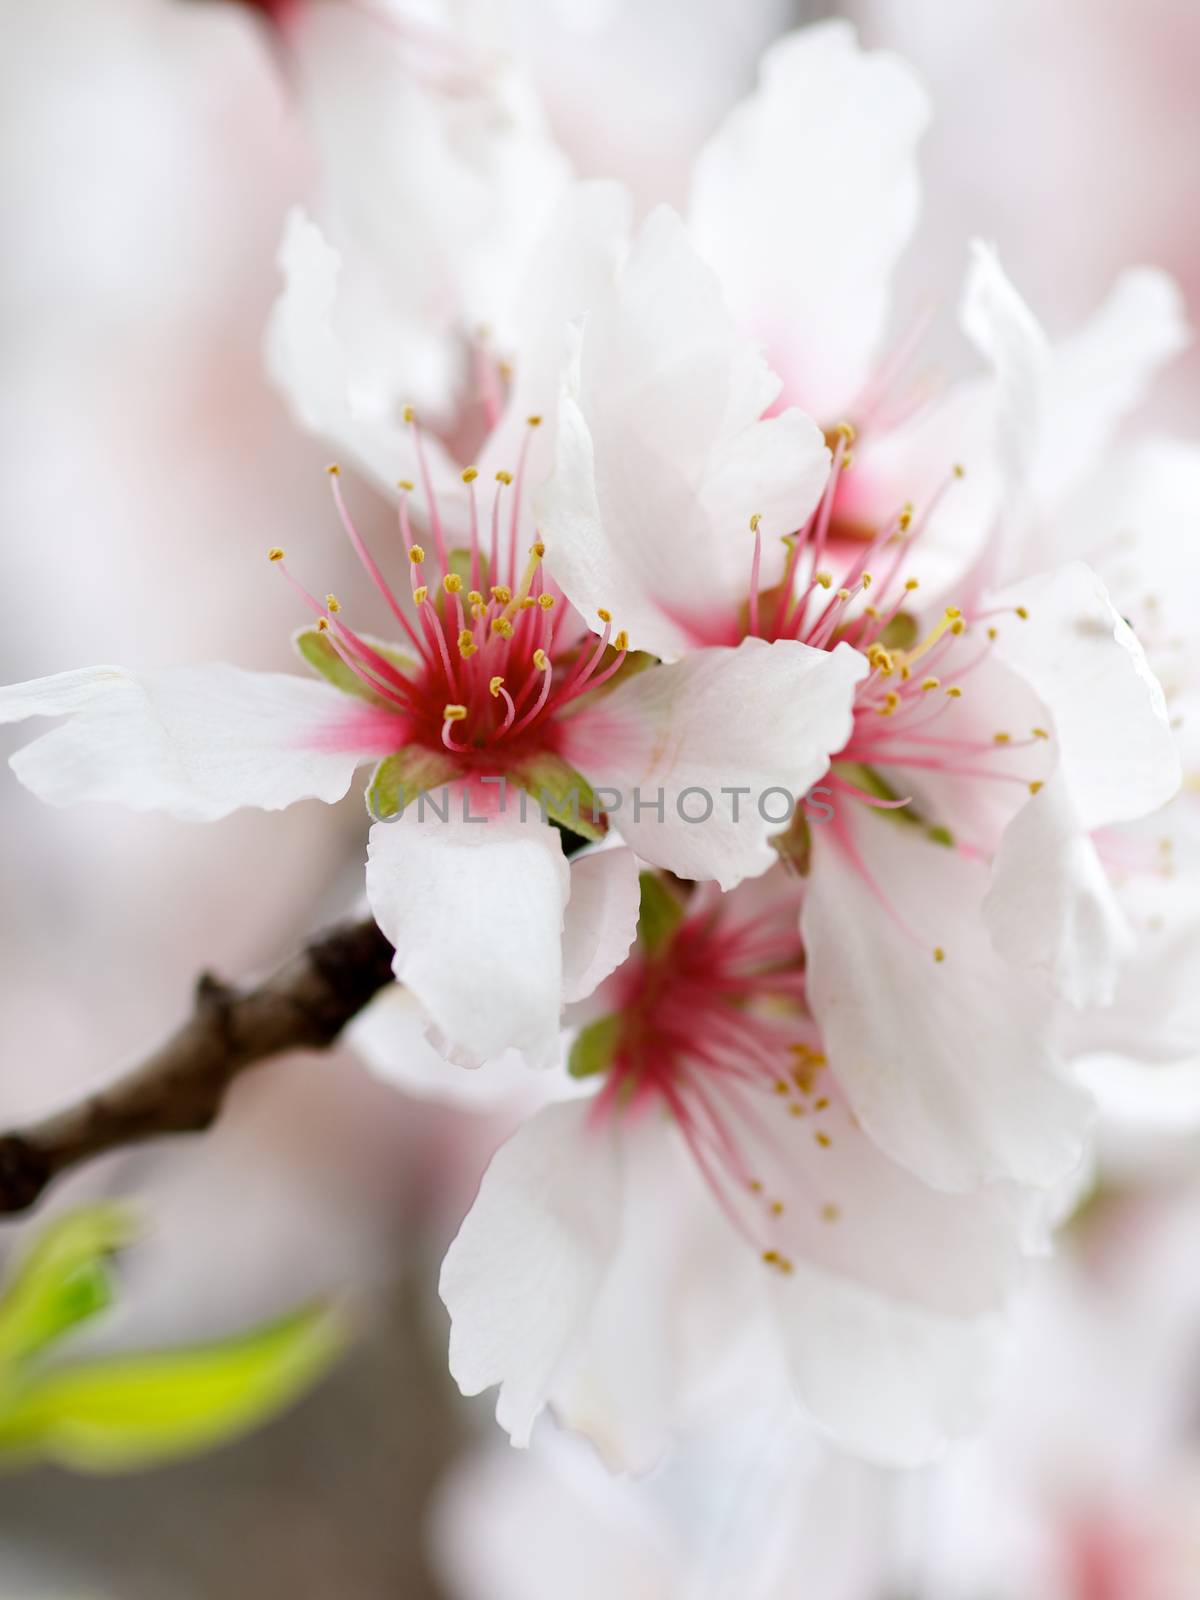 White Cherry Blossom by zhekos